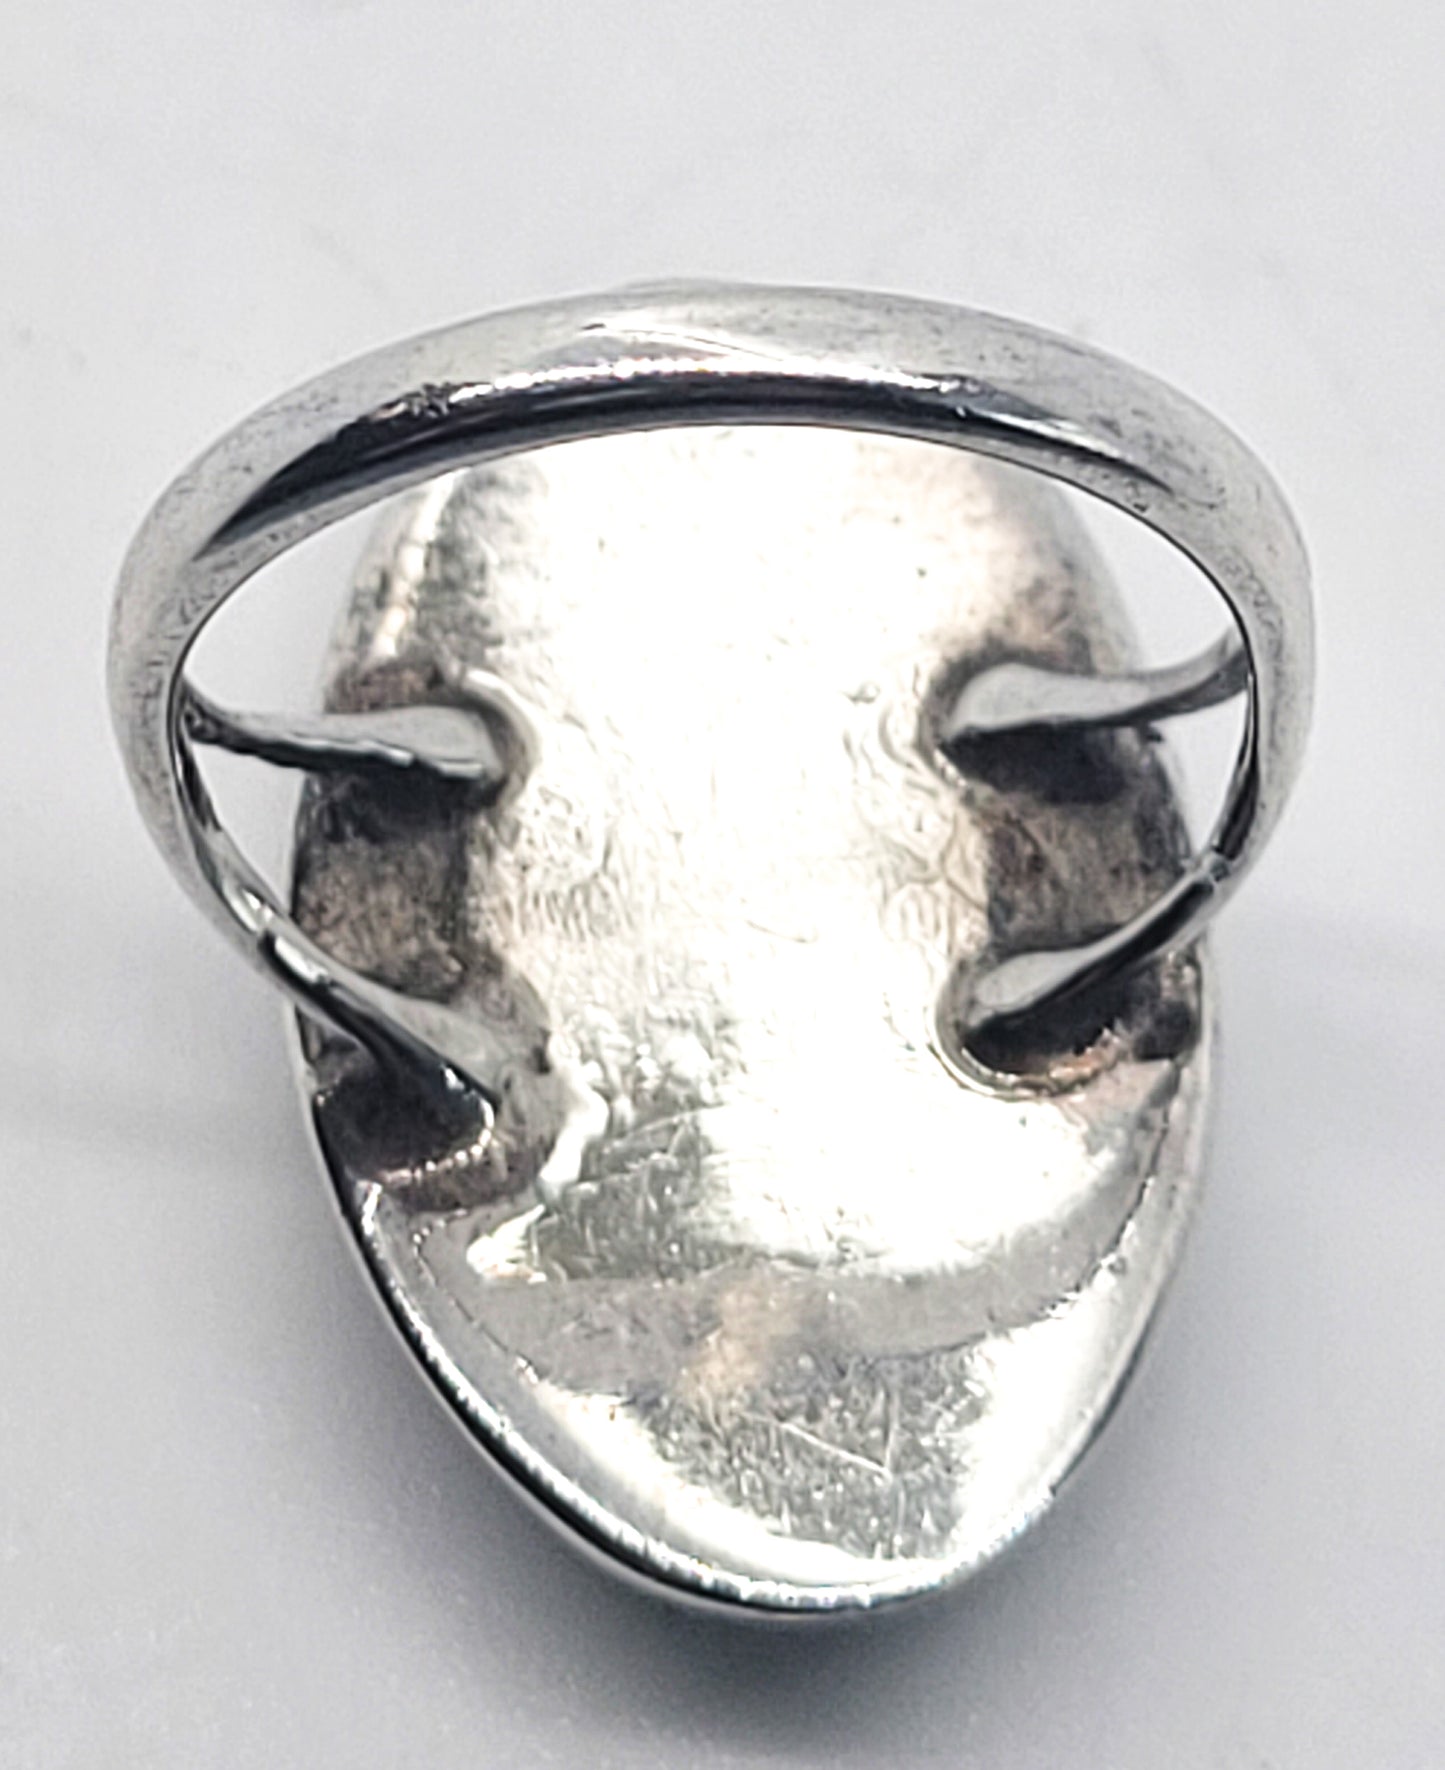 Malachite large Southwestern split shank sterling silver ring size 5.5